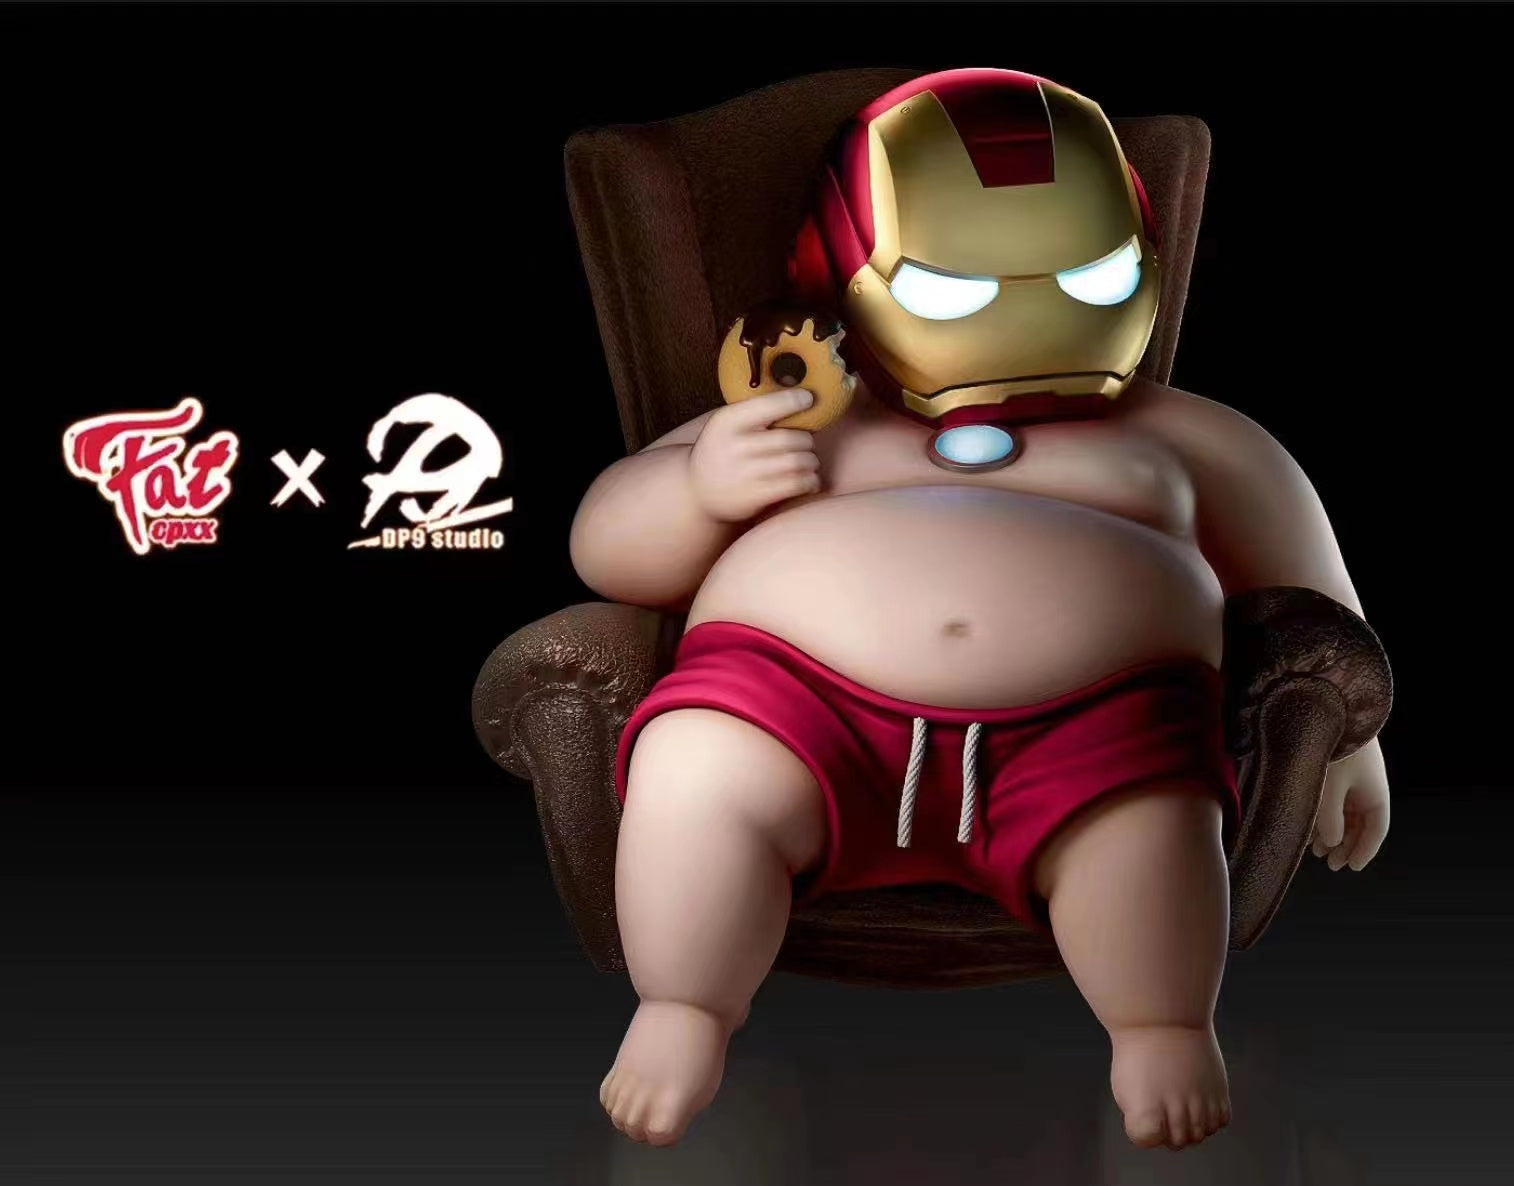 CPXX Studio X DP9 Studio - Couch Potato with Iron Man Helmut